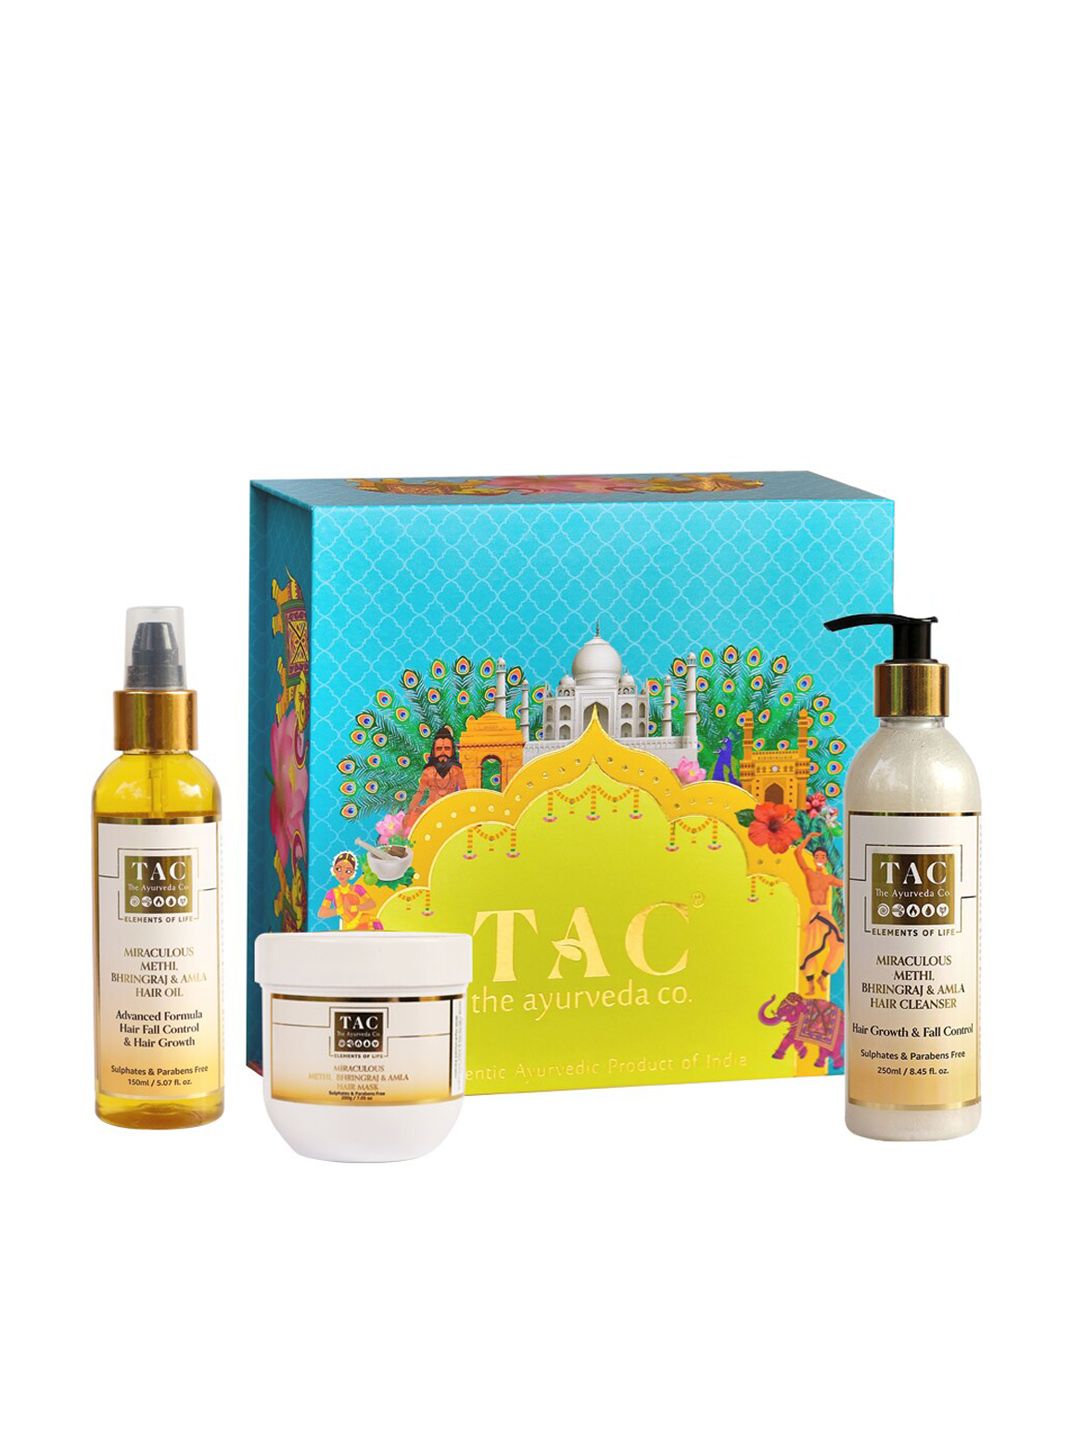 TAC - The Ayurveda Co. Methi Bhringraj Amla Hair Growth & Hair Fall Control Combo Kit Price in India